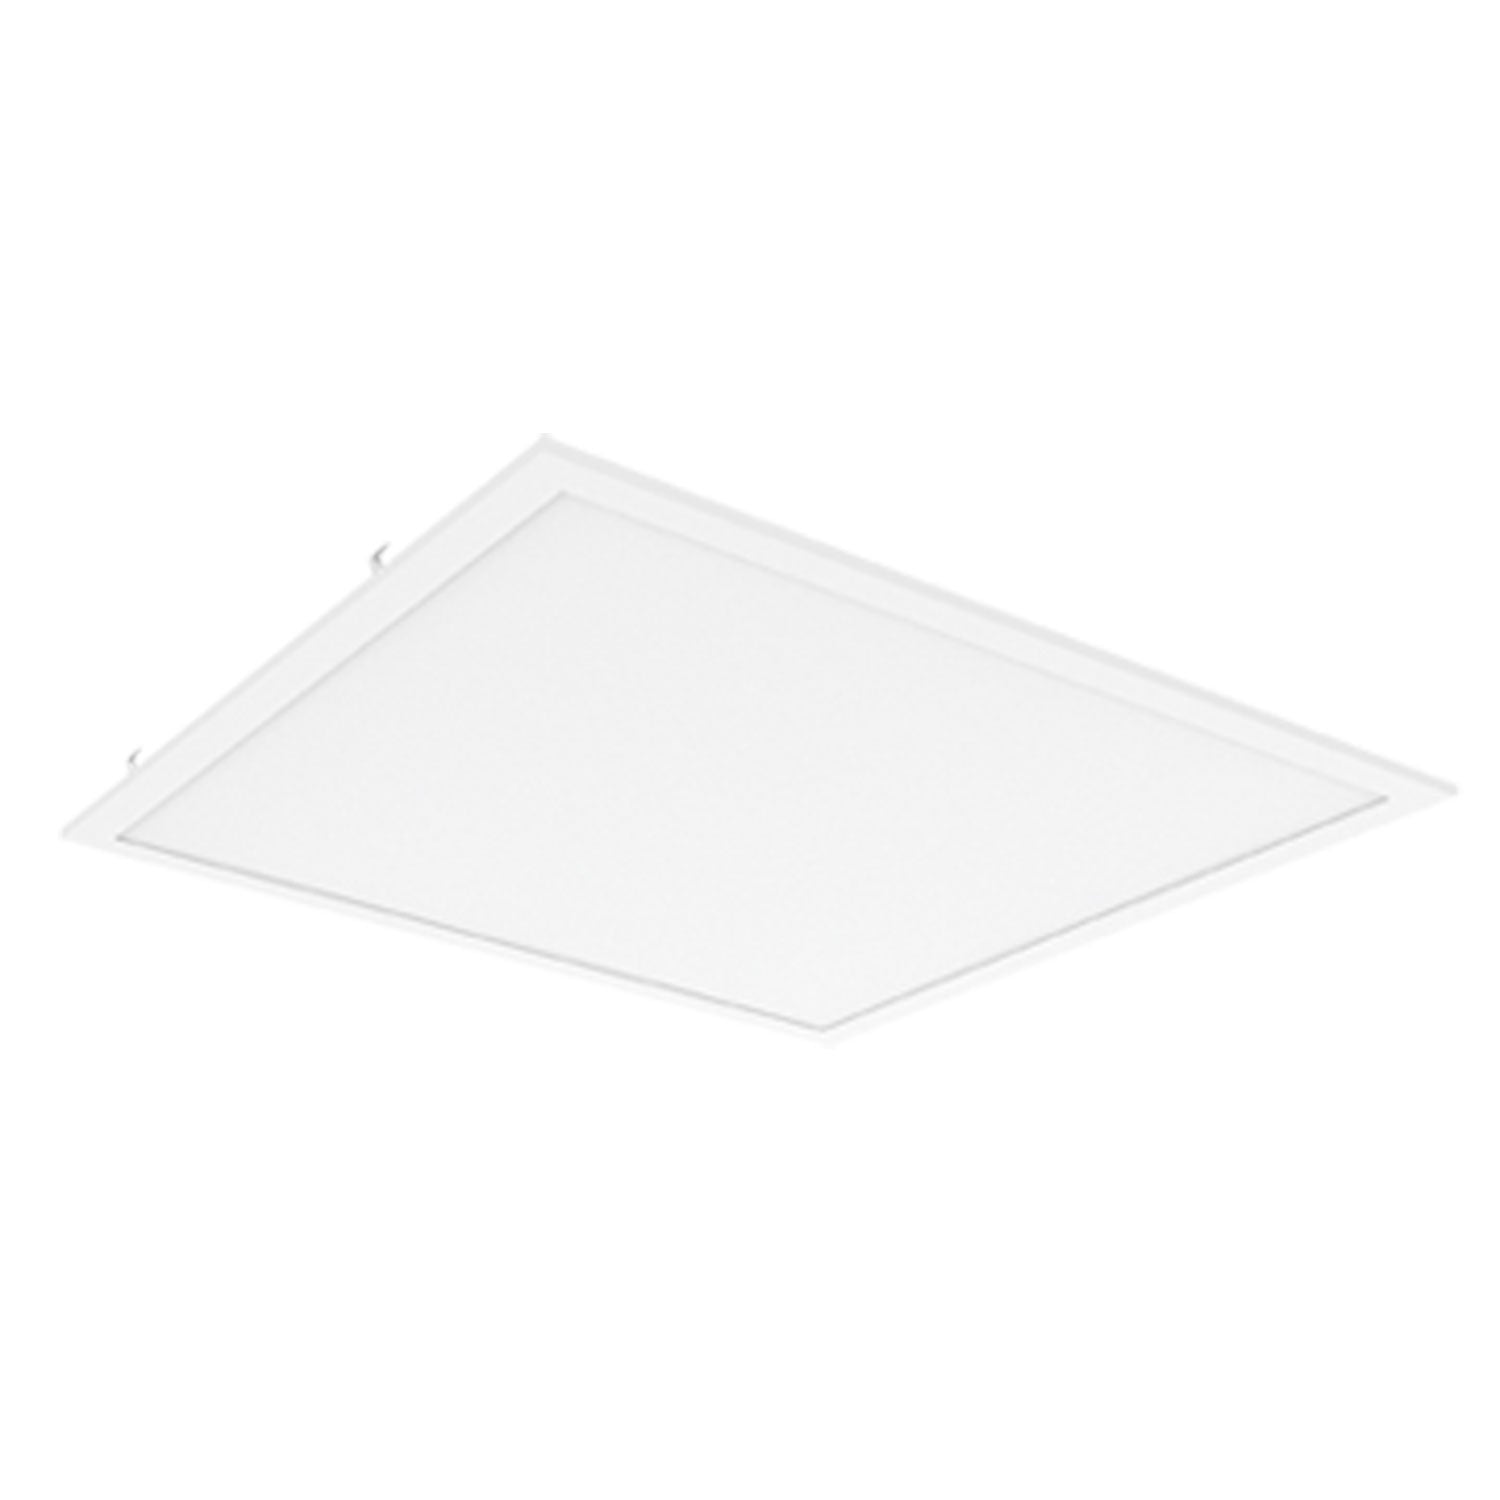 CCT Tunable and Wattage Selector 2x2 Backlit Flat Panel, White